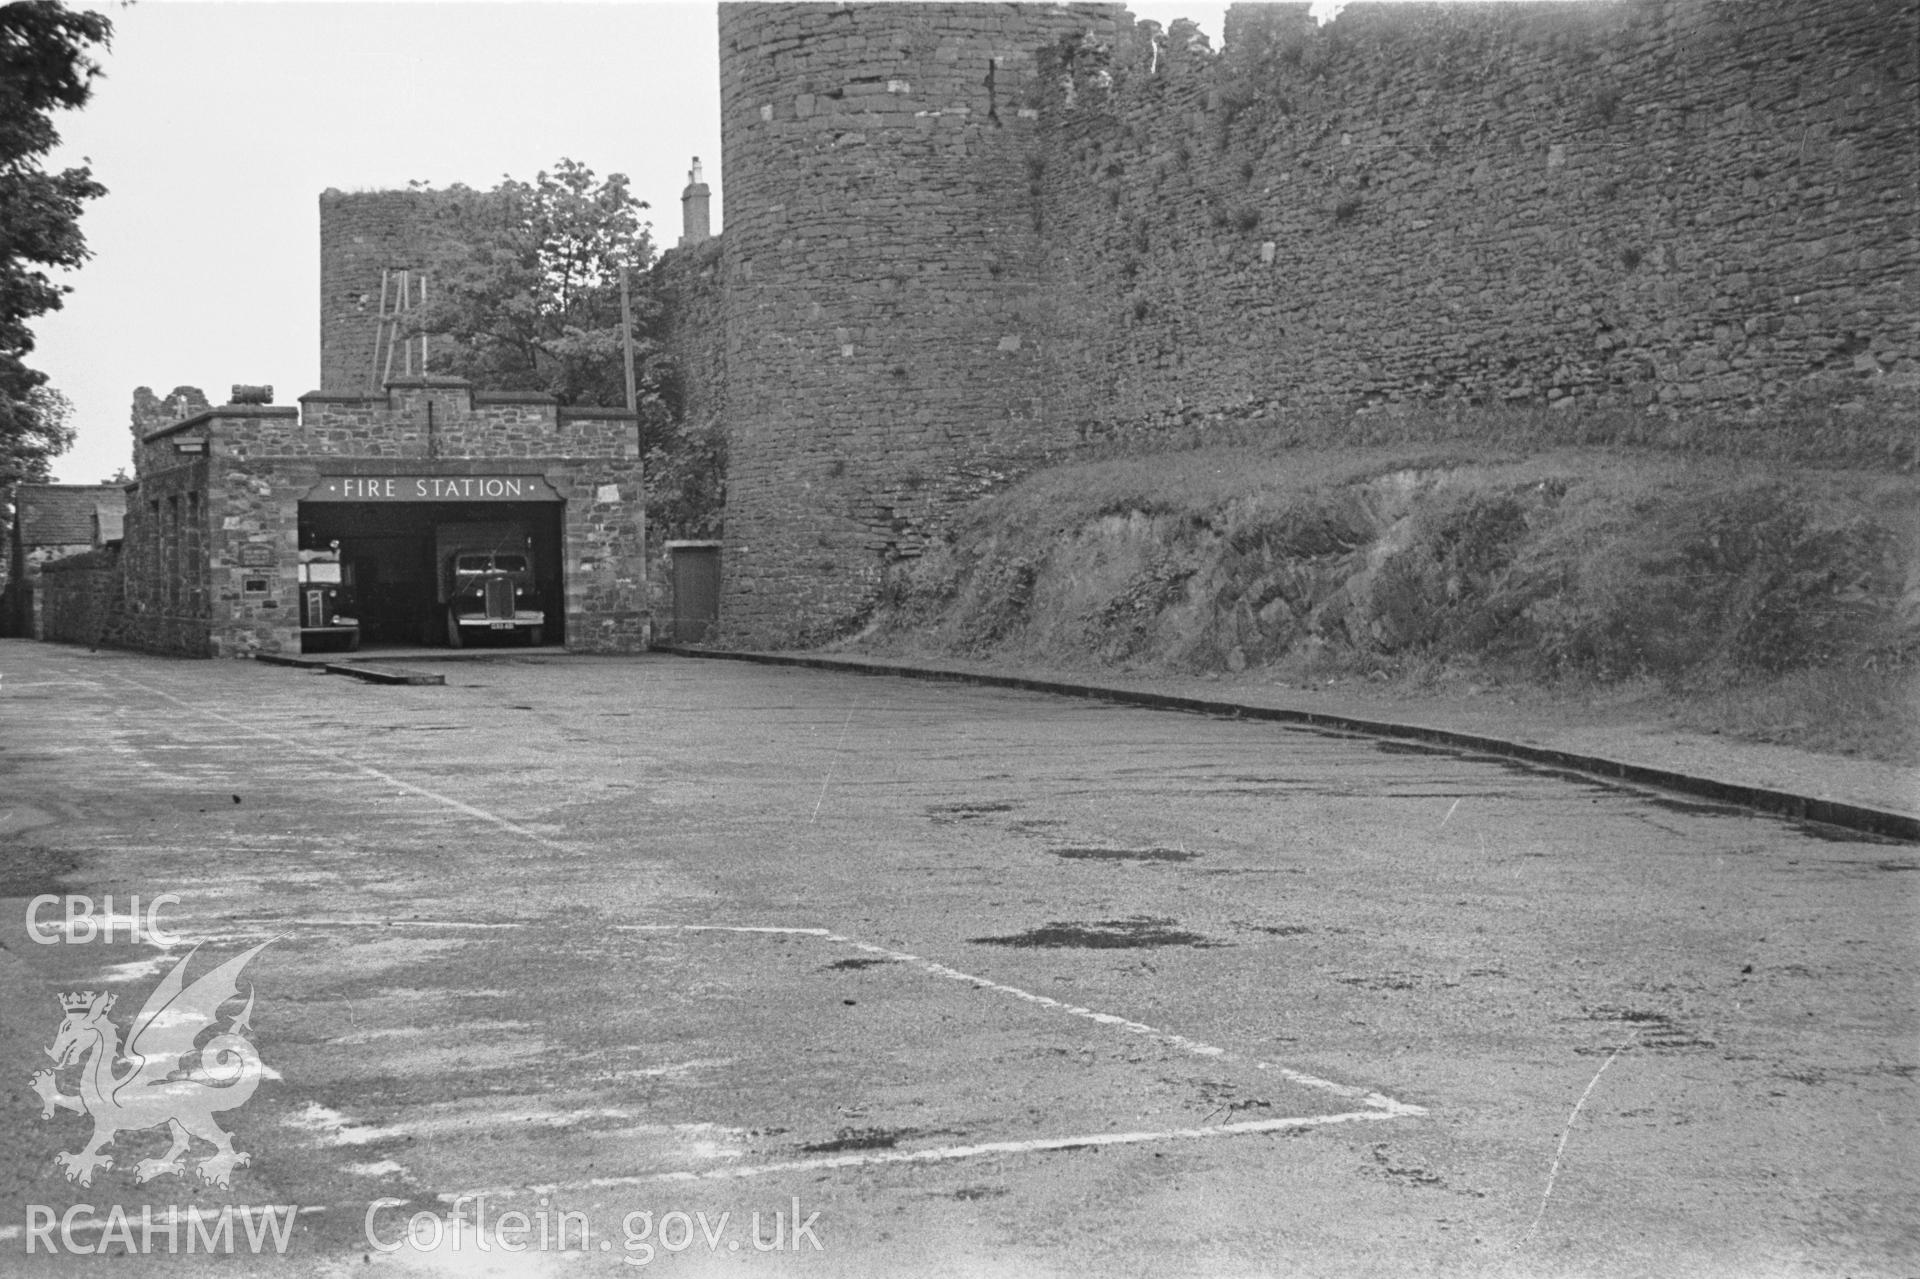 D.O.E photograph of Conwy Town Walls.